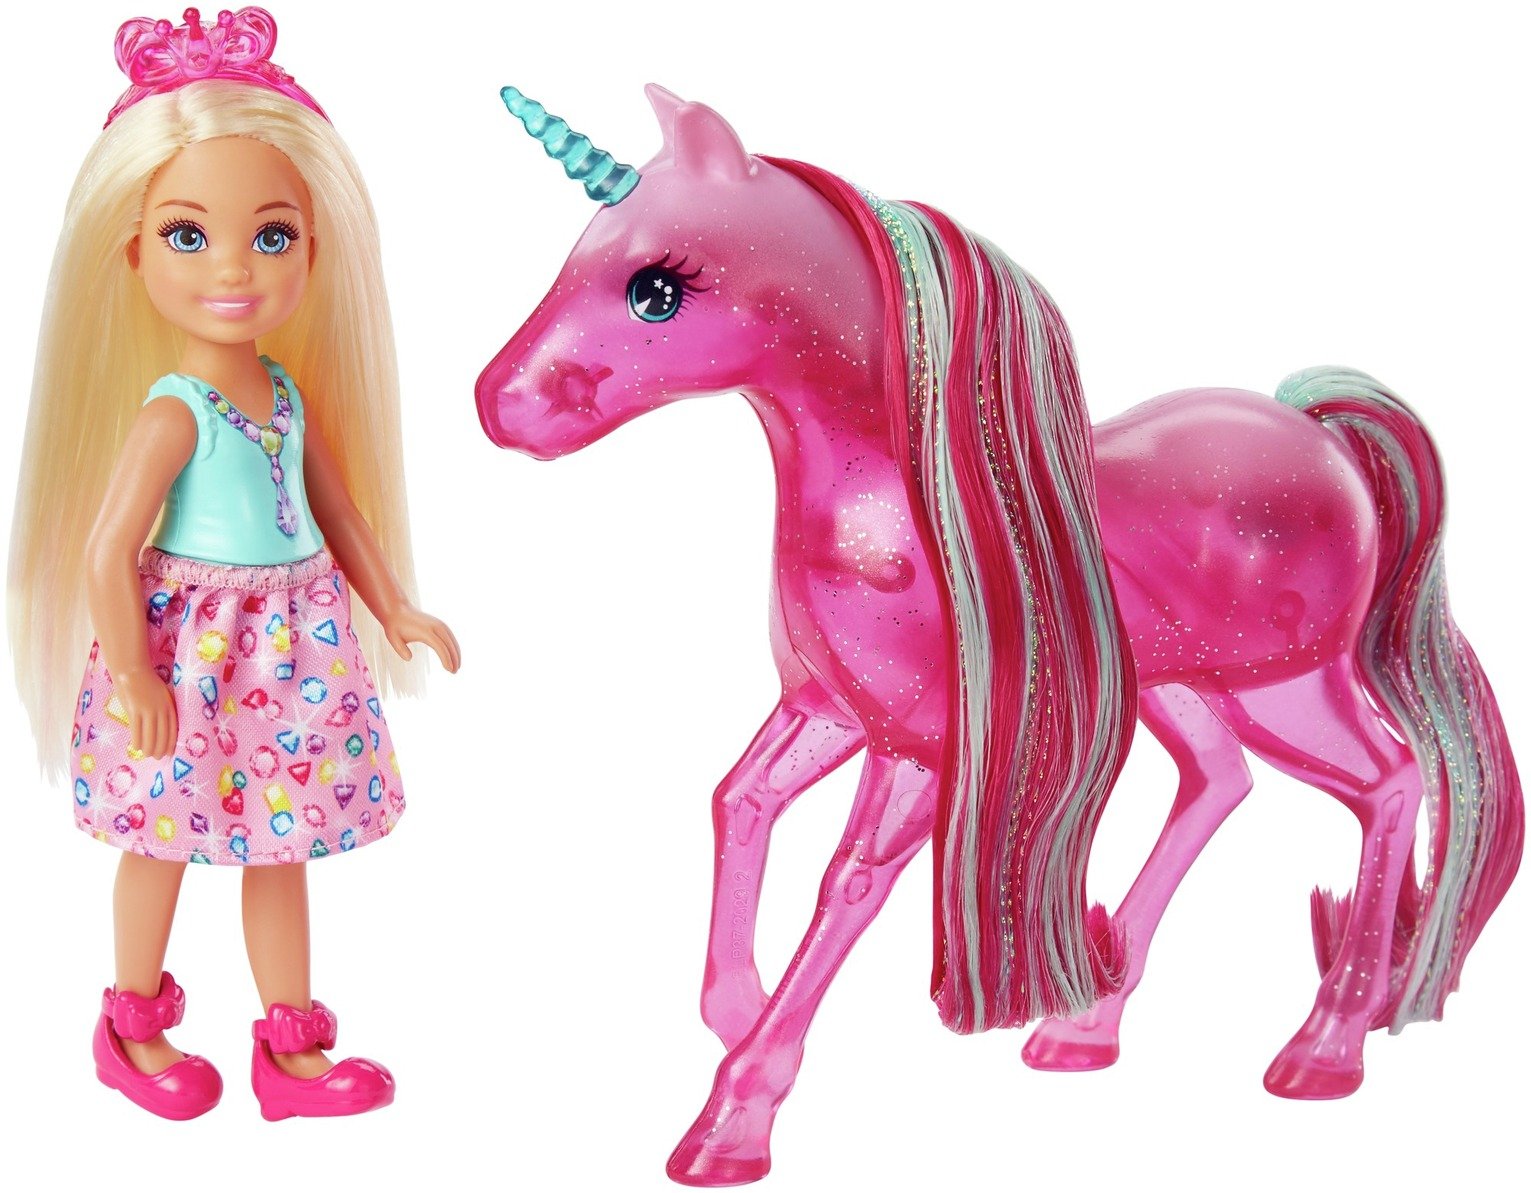 Buy Barbie Dreamptopia Chelsea Doll and 